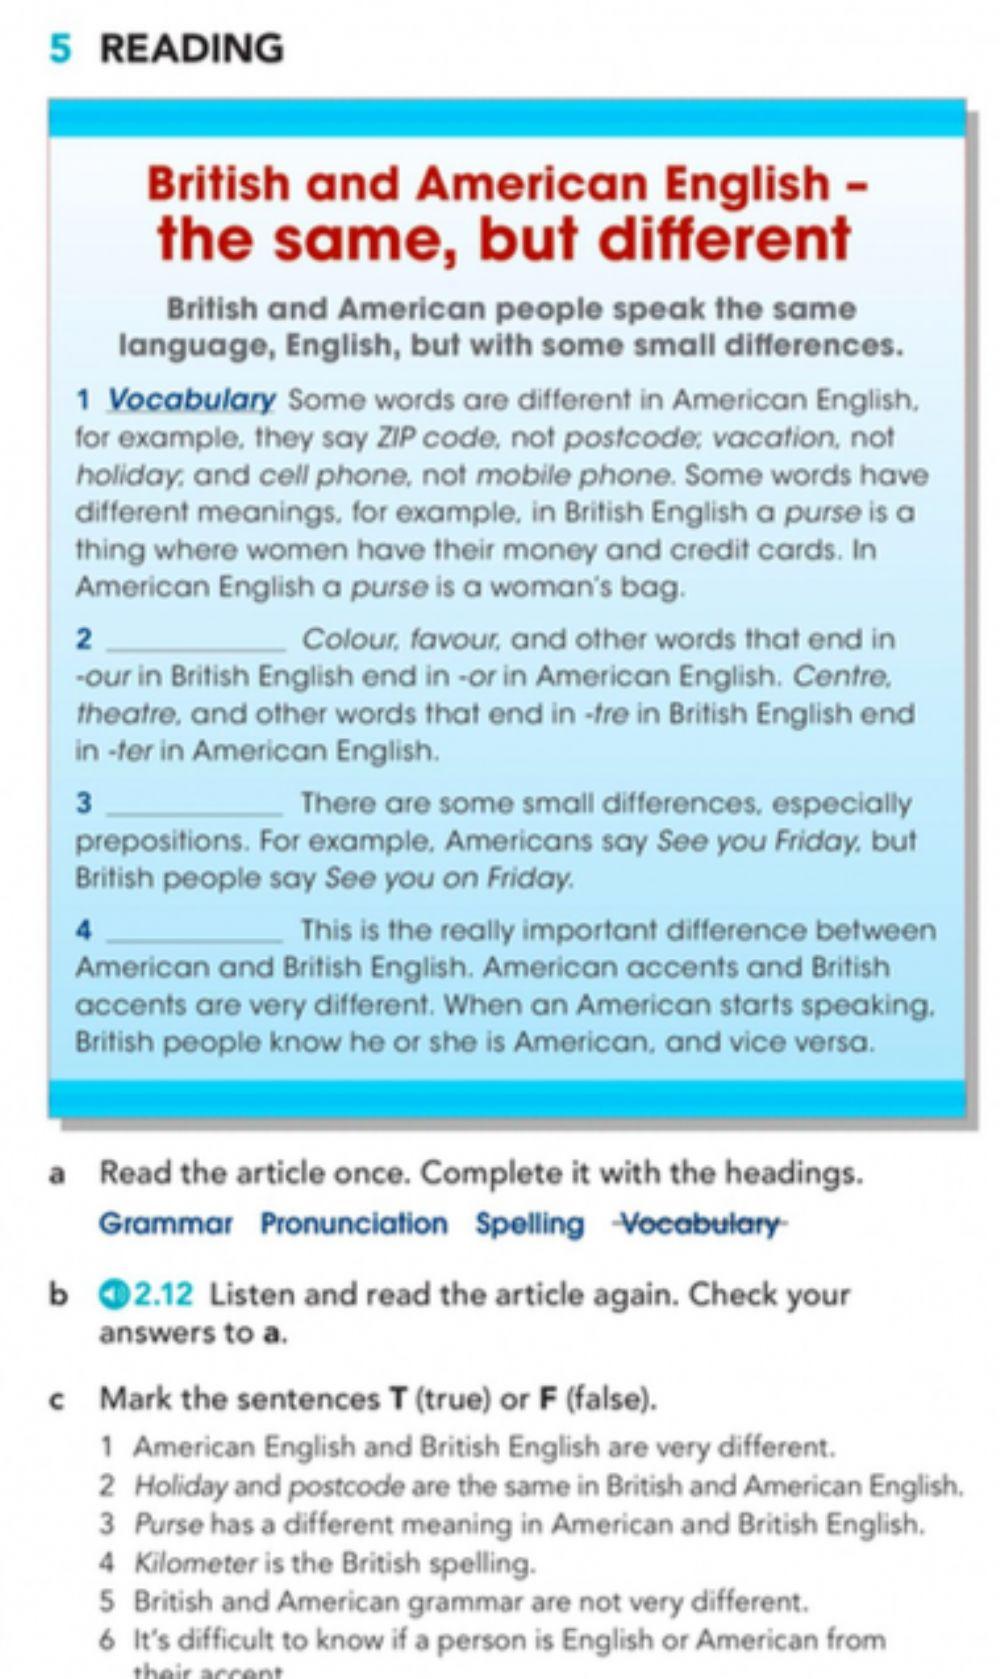 AGAIN definition in American English